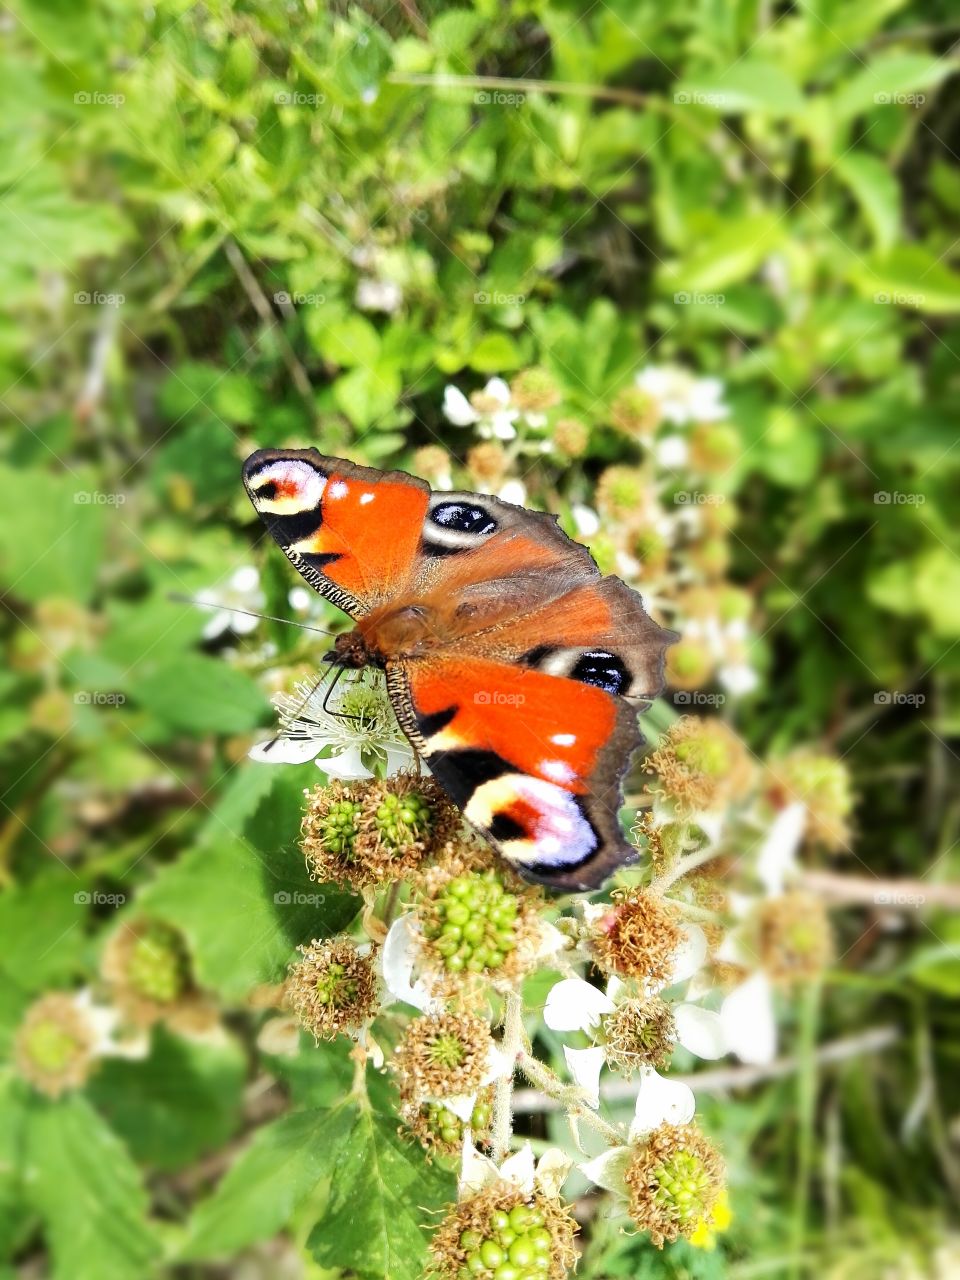 Butterfly on immature blackberry shrub